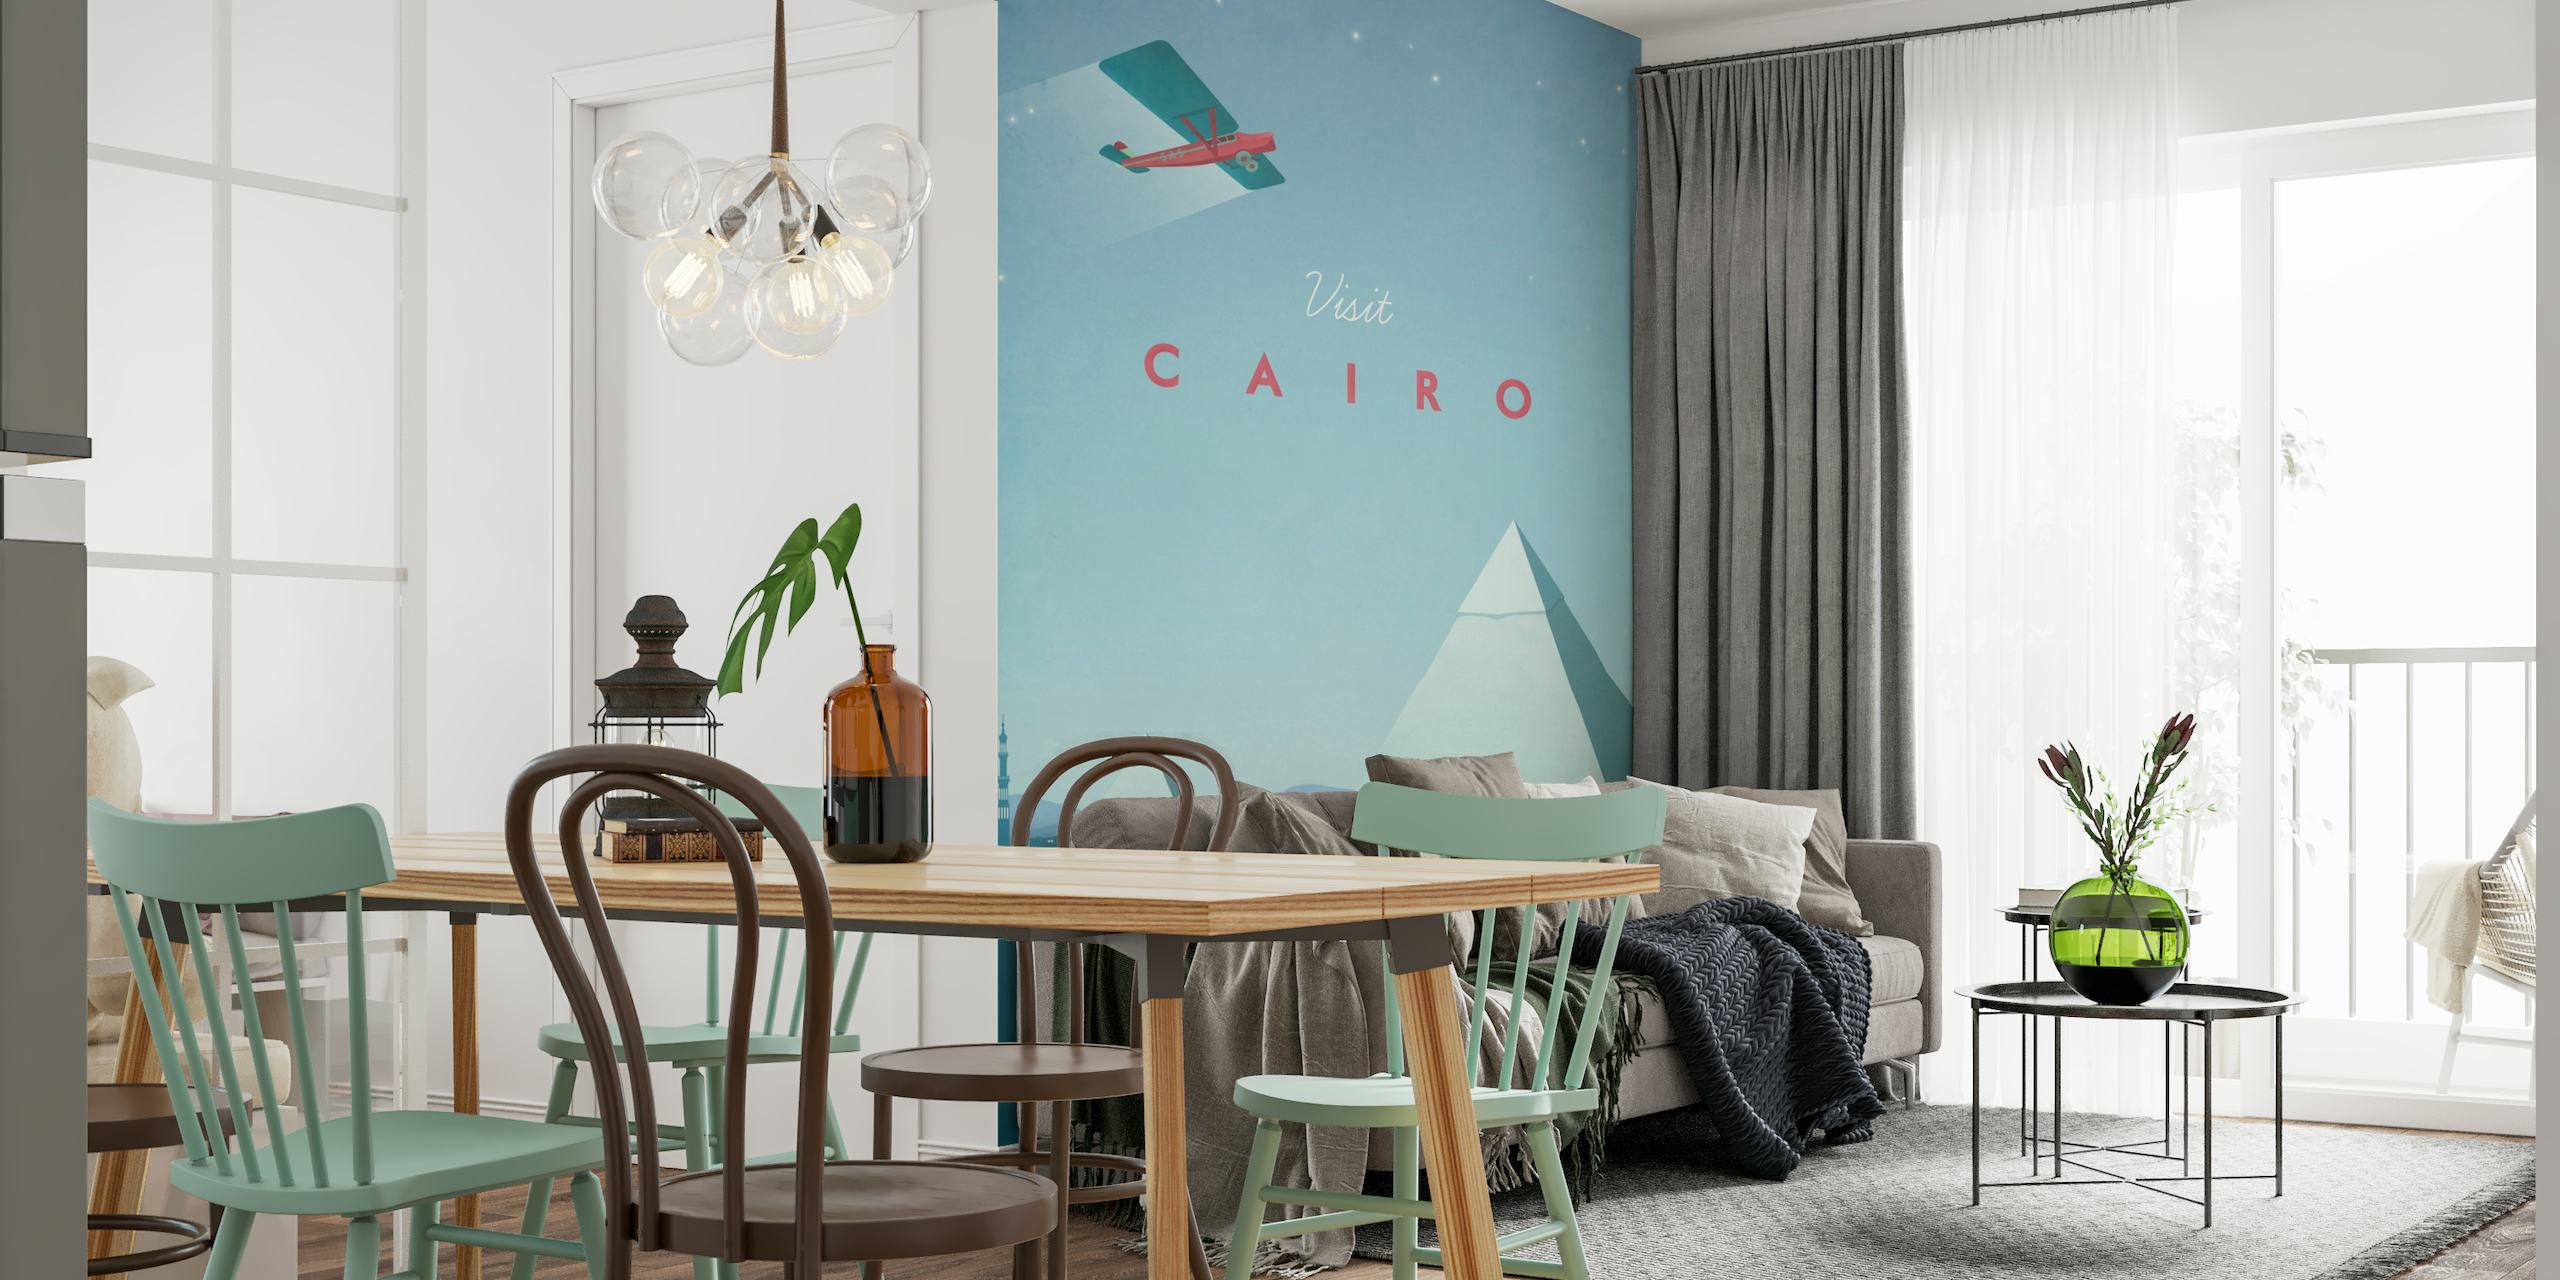 Cairo Travel Poster behang